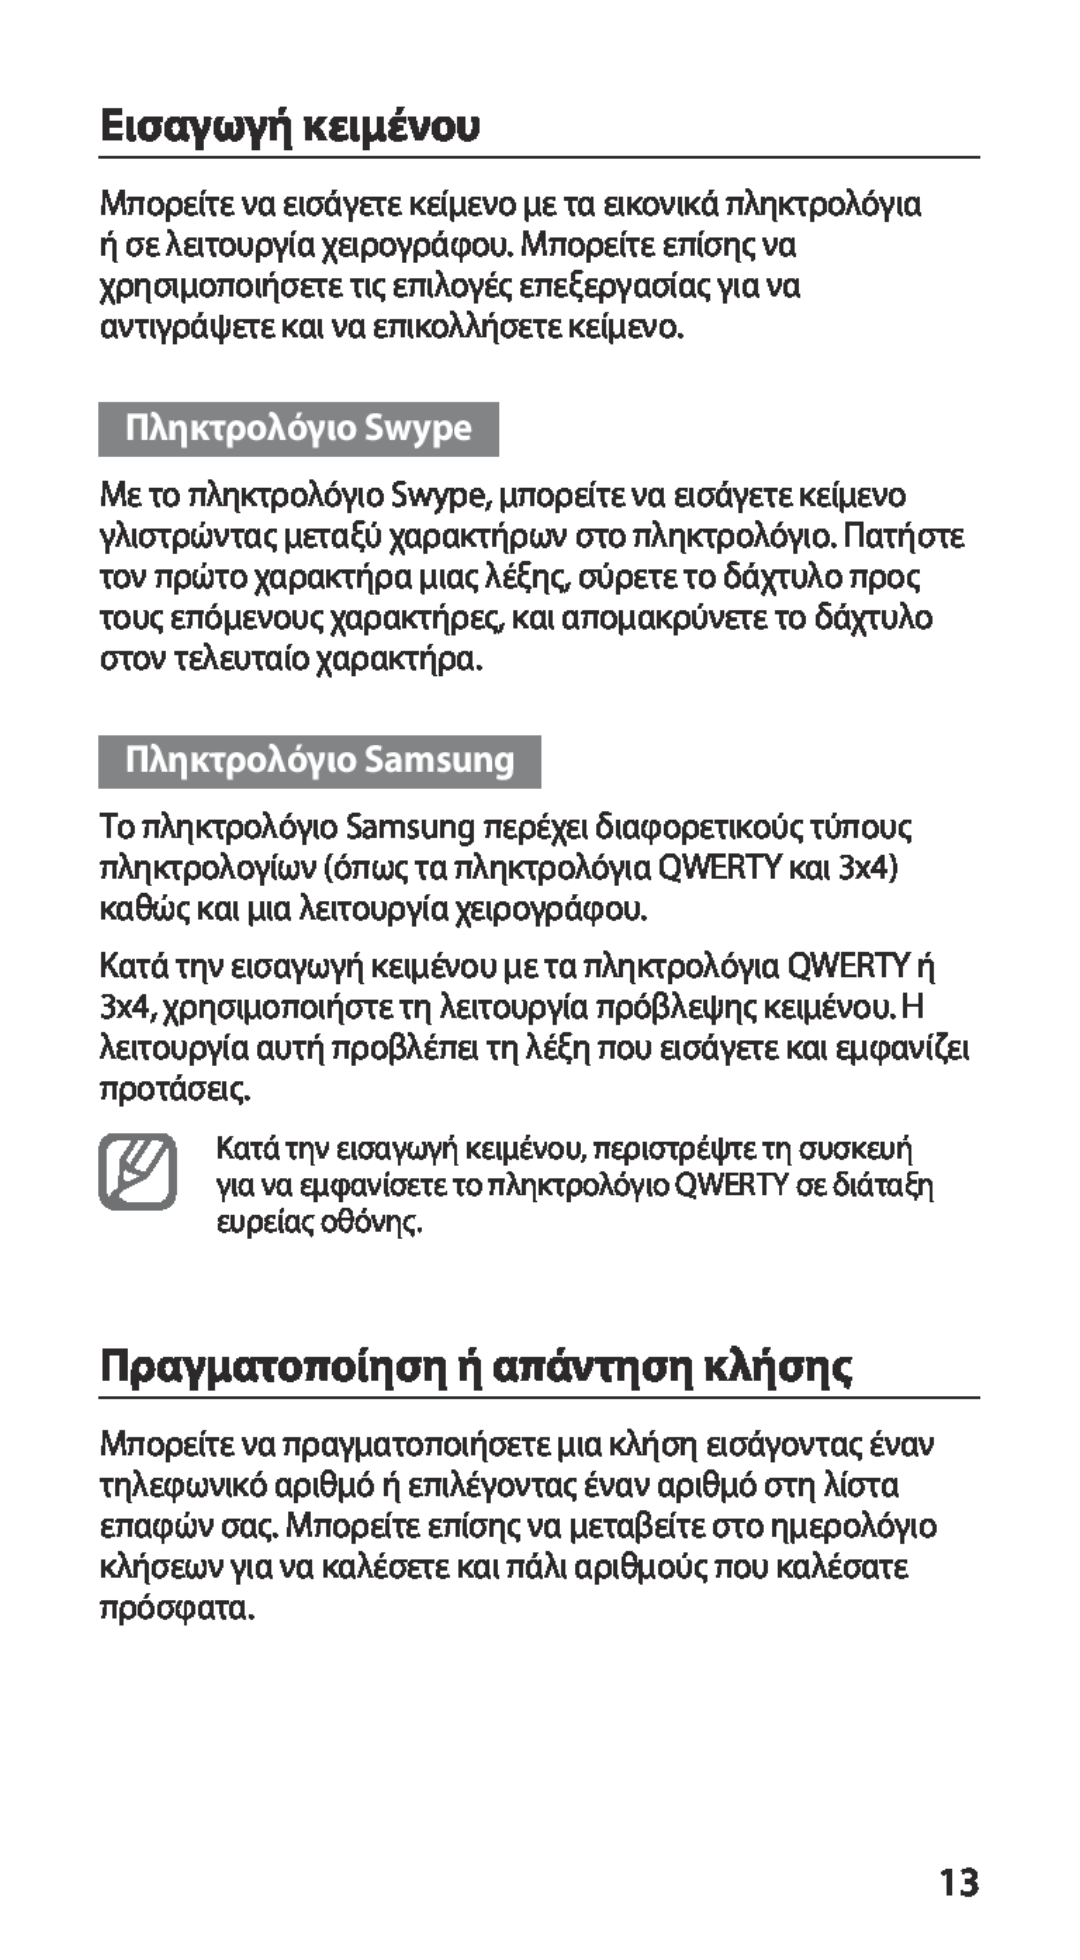 Samsung GT-I9100RWACYO manual Εισαγωγή κειμένου, Πραγματοποίηση ή απάντηση κλήσης, Πληκτρολόγιο Swype, Πληκτρολόγιο Samsung 